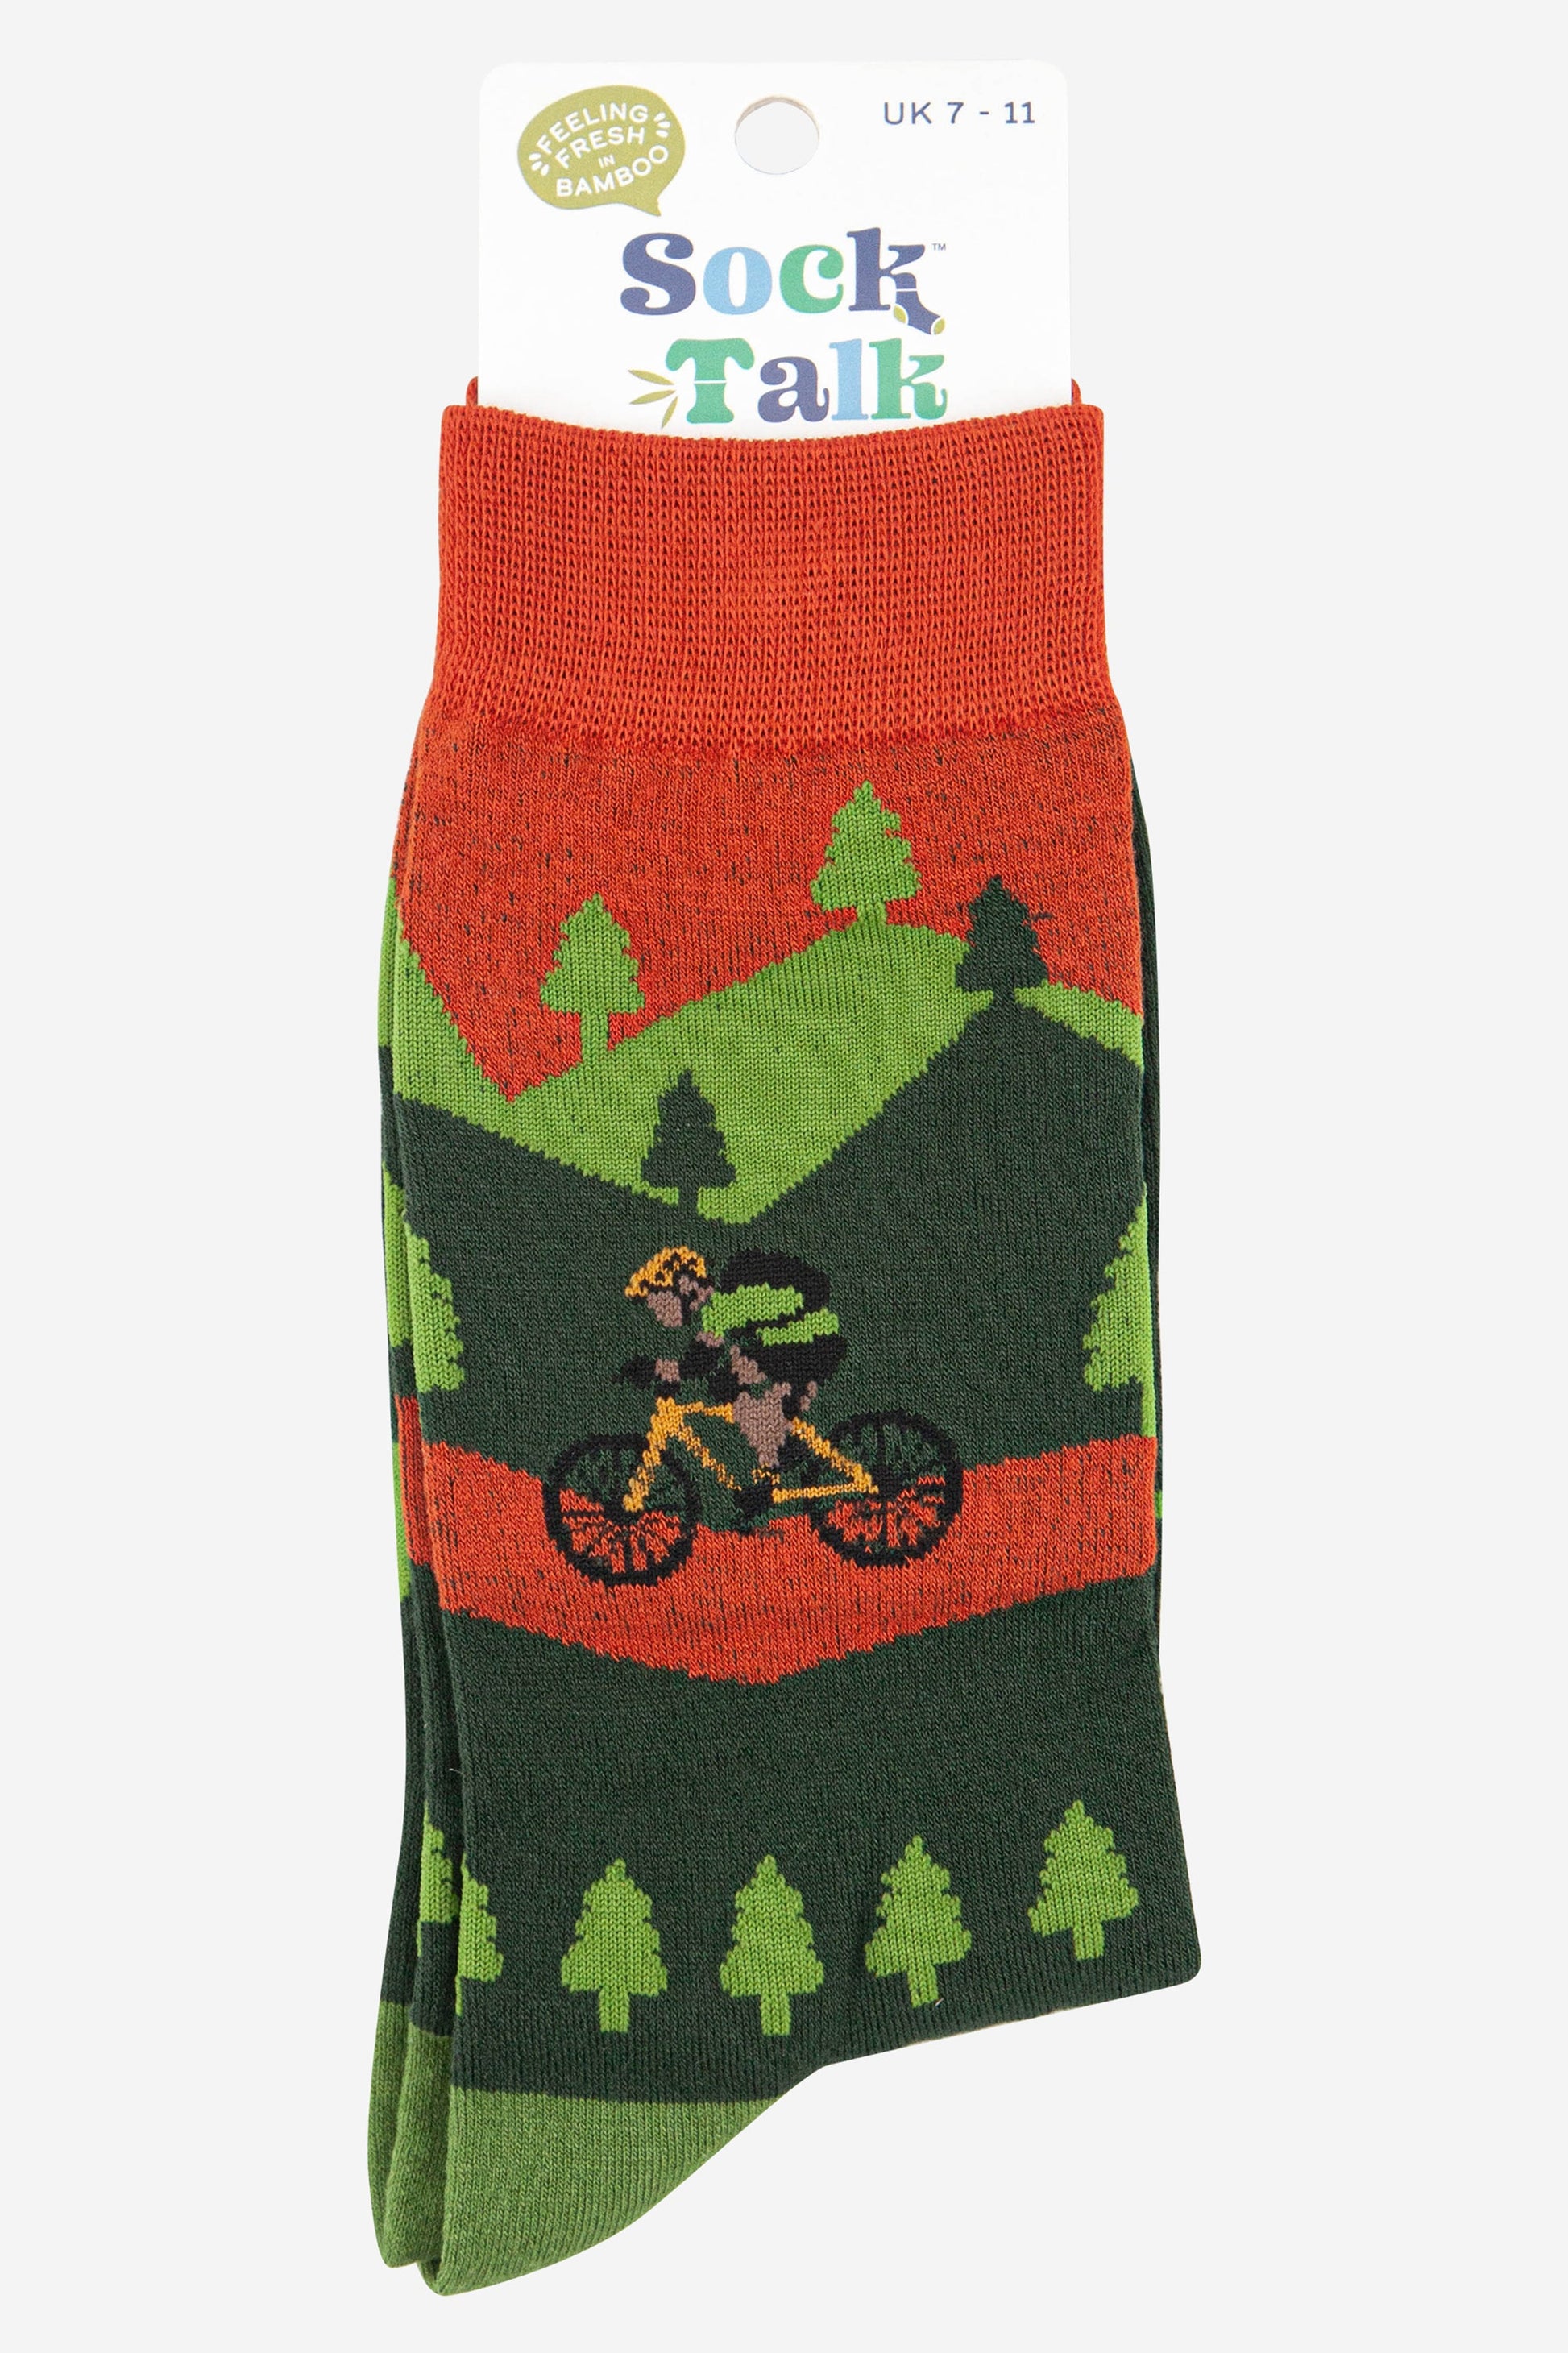 mens mountain bike forest print bamboo socks uk size 7-11